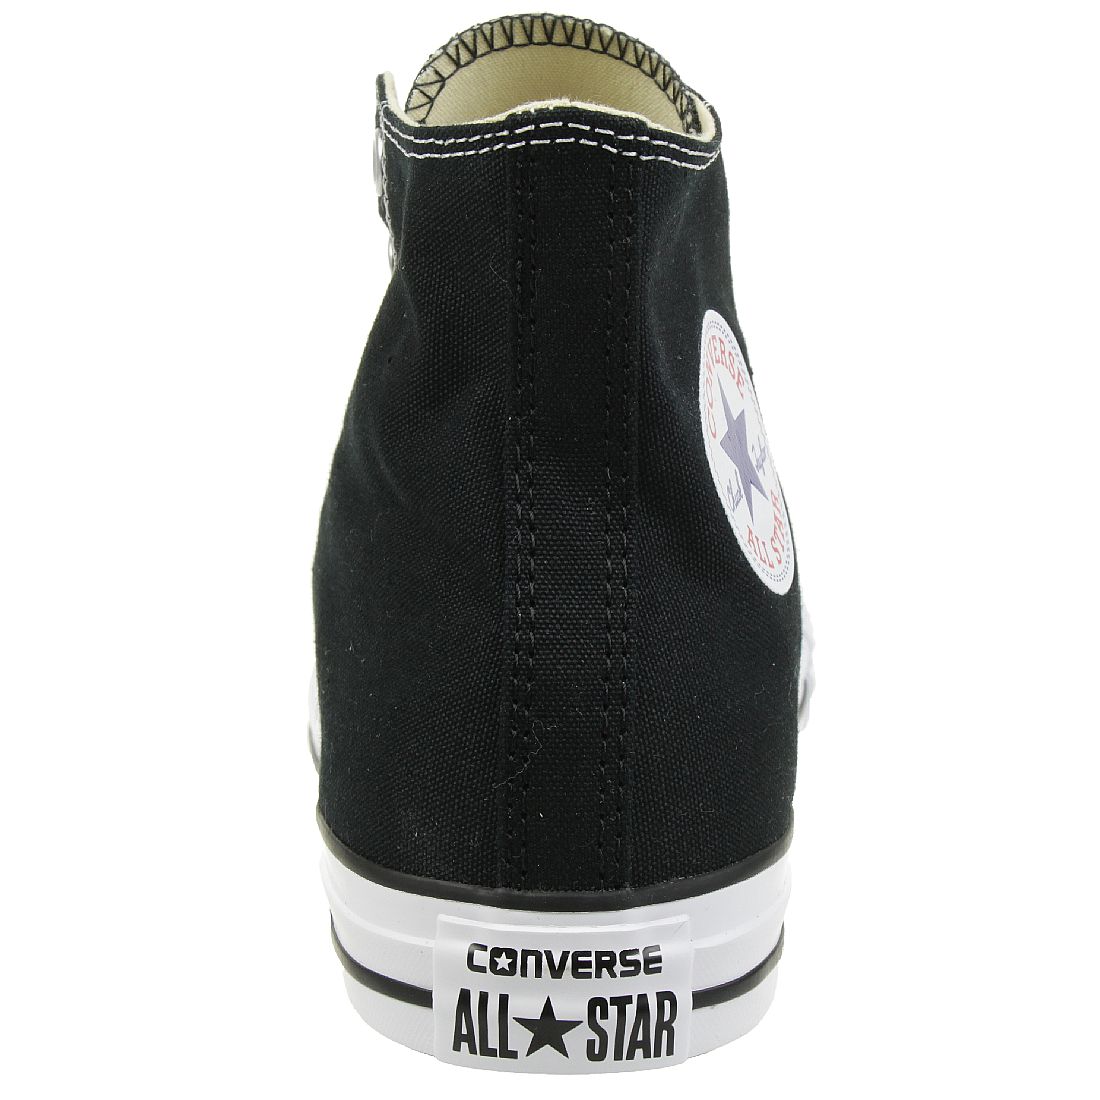 Converse C Taylor All Star HI Chuck Schuhe Sneaker canvas Black M9160C